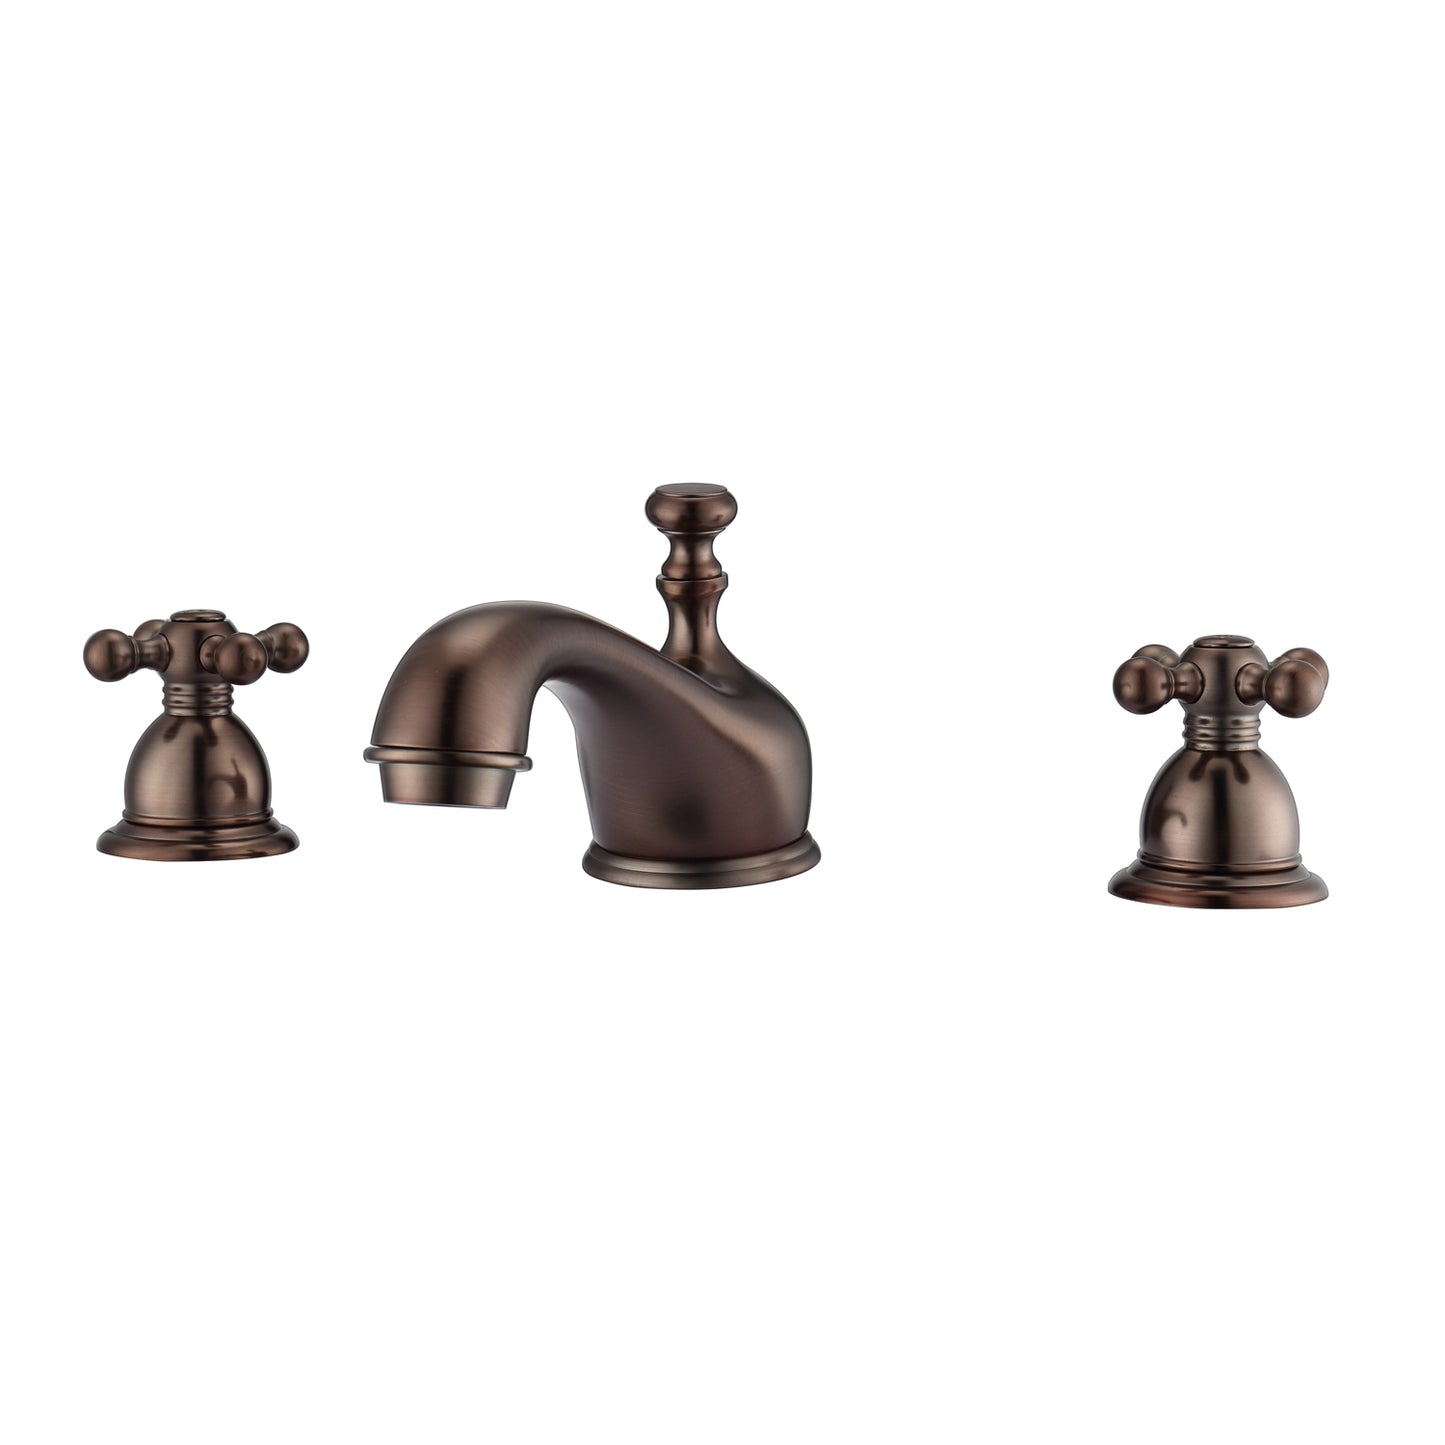 Marsala 8" Widespread Oil Rubbed Bronze Bathroom Faucet with Metal Cross Handles